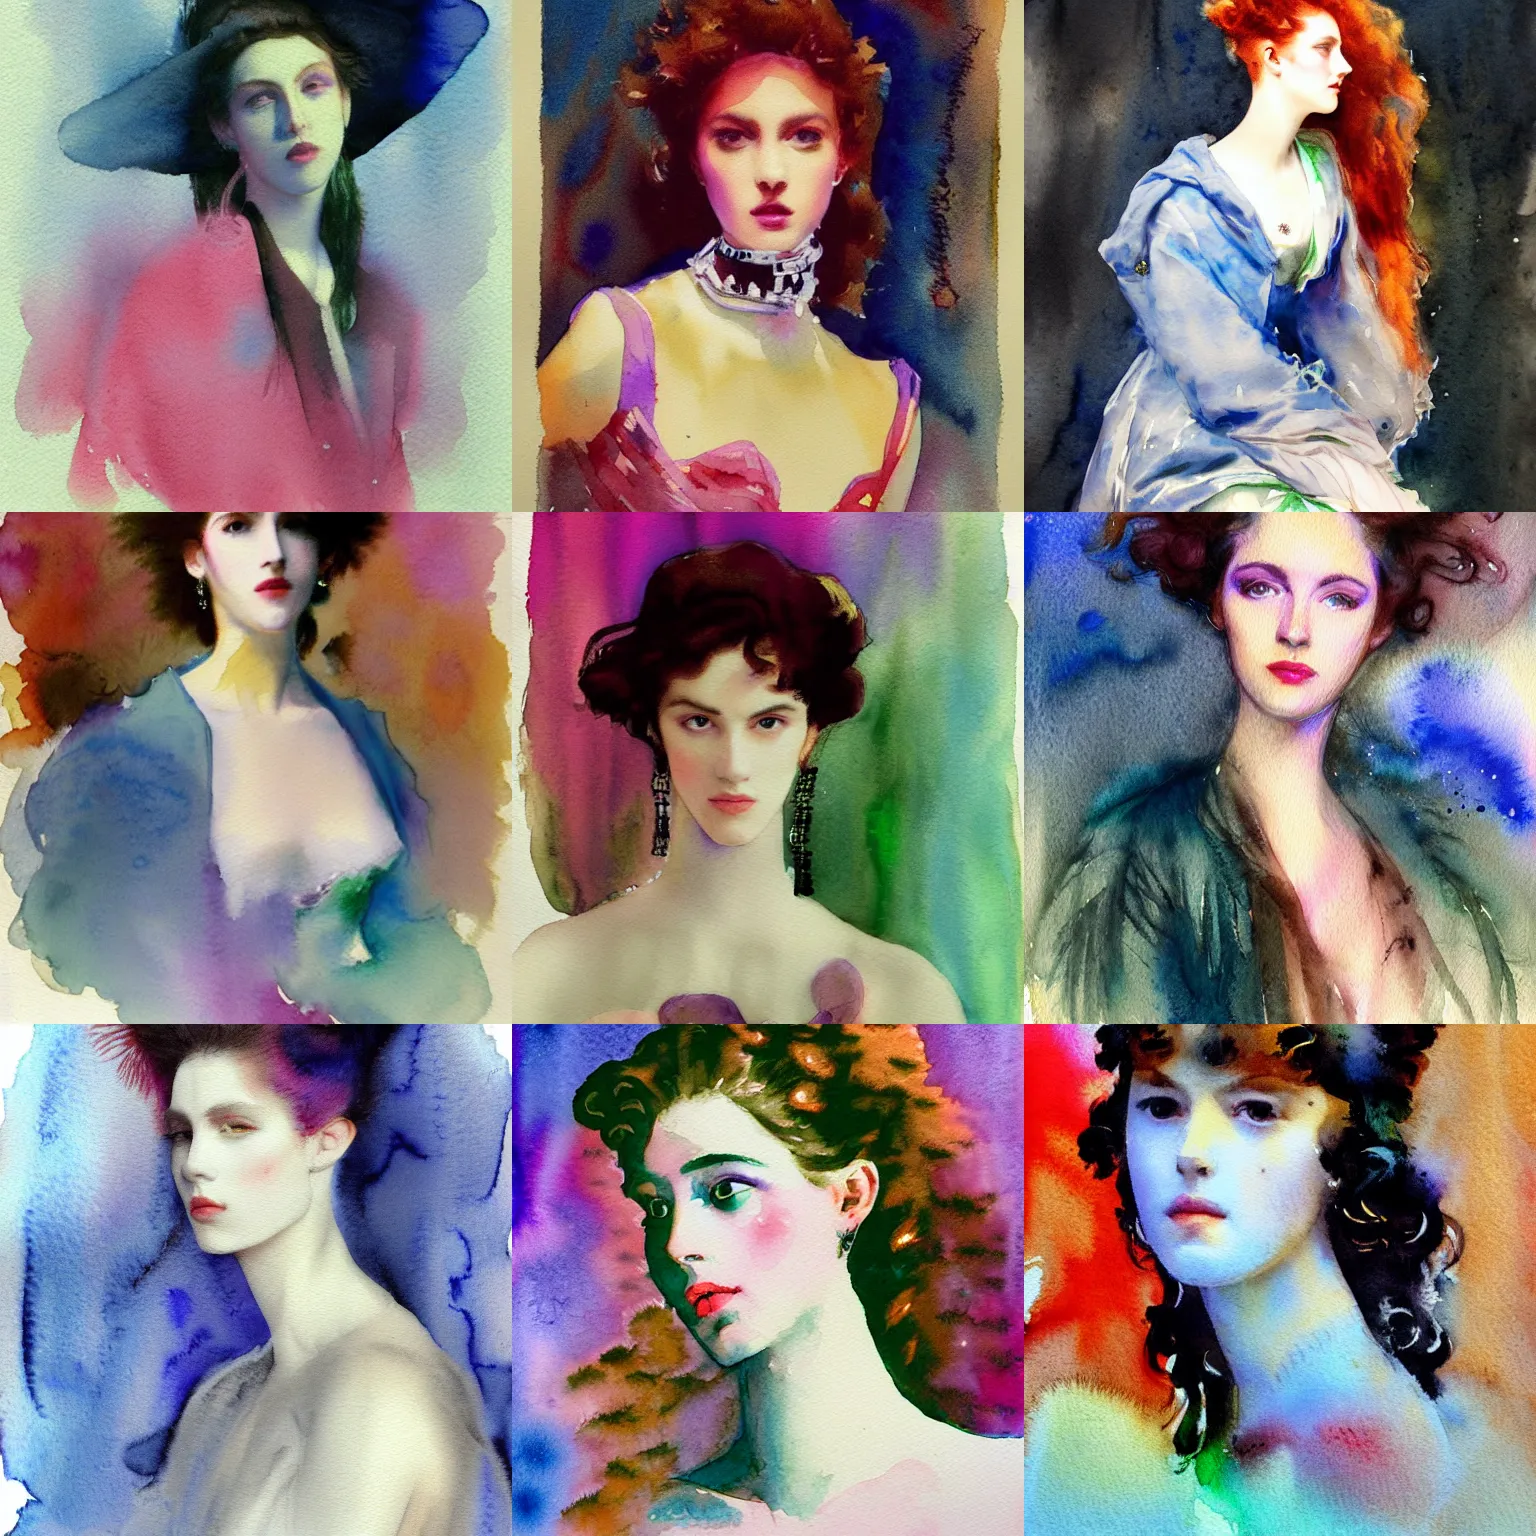 Prompt: women's fashion model, intricate vaporwave watercolor portrait by john singer sargent